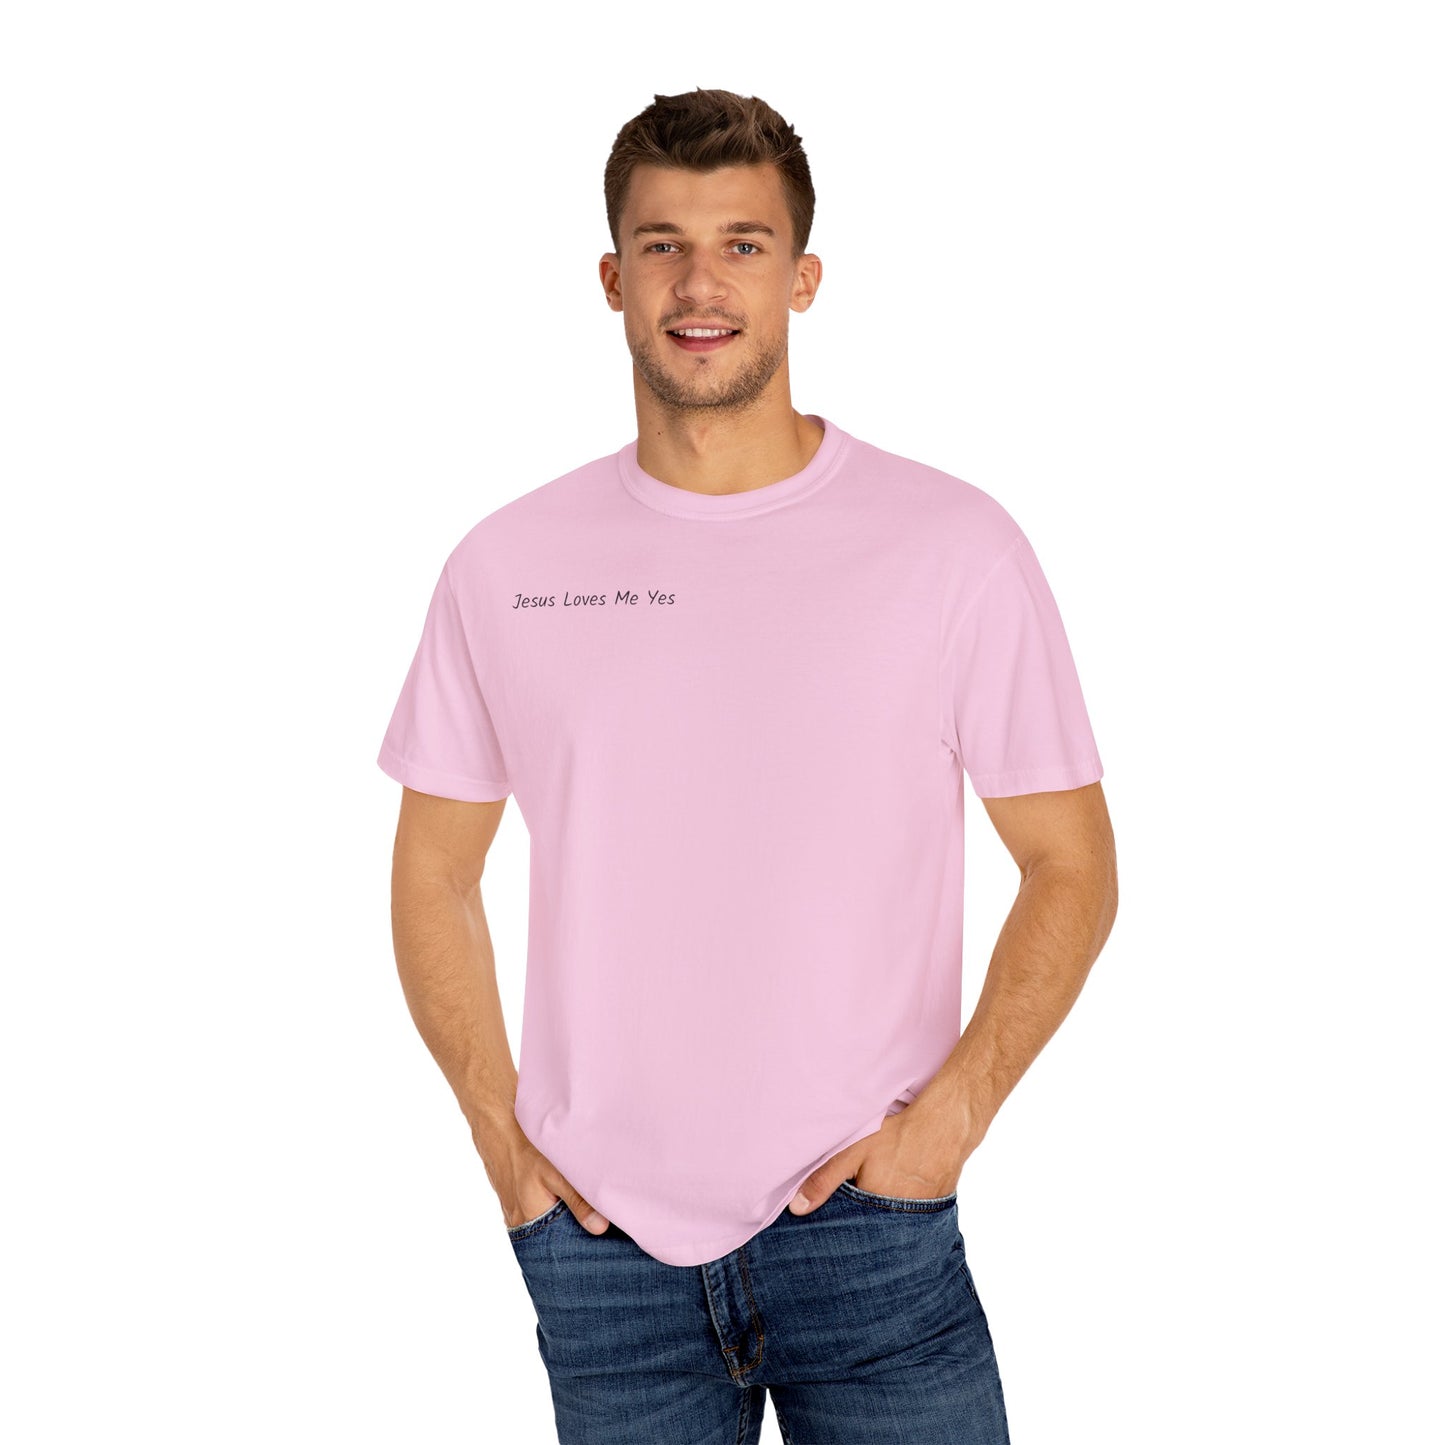 My Friend Jesus Unisex Garment-Dyed T-shirt